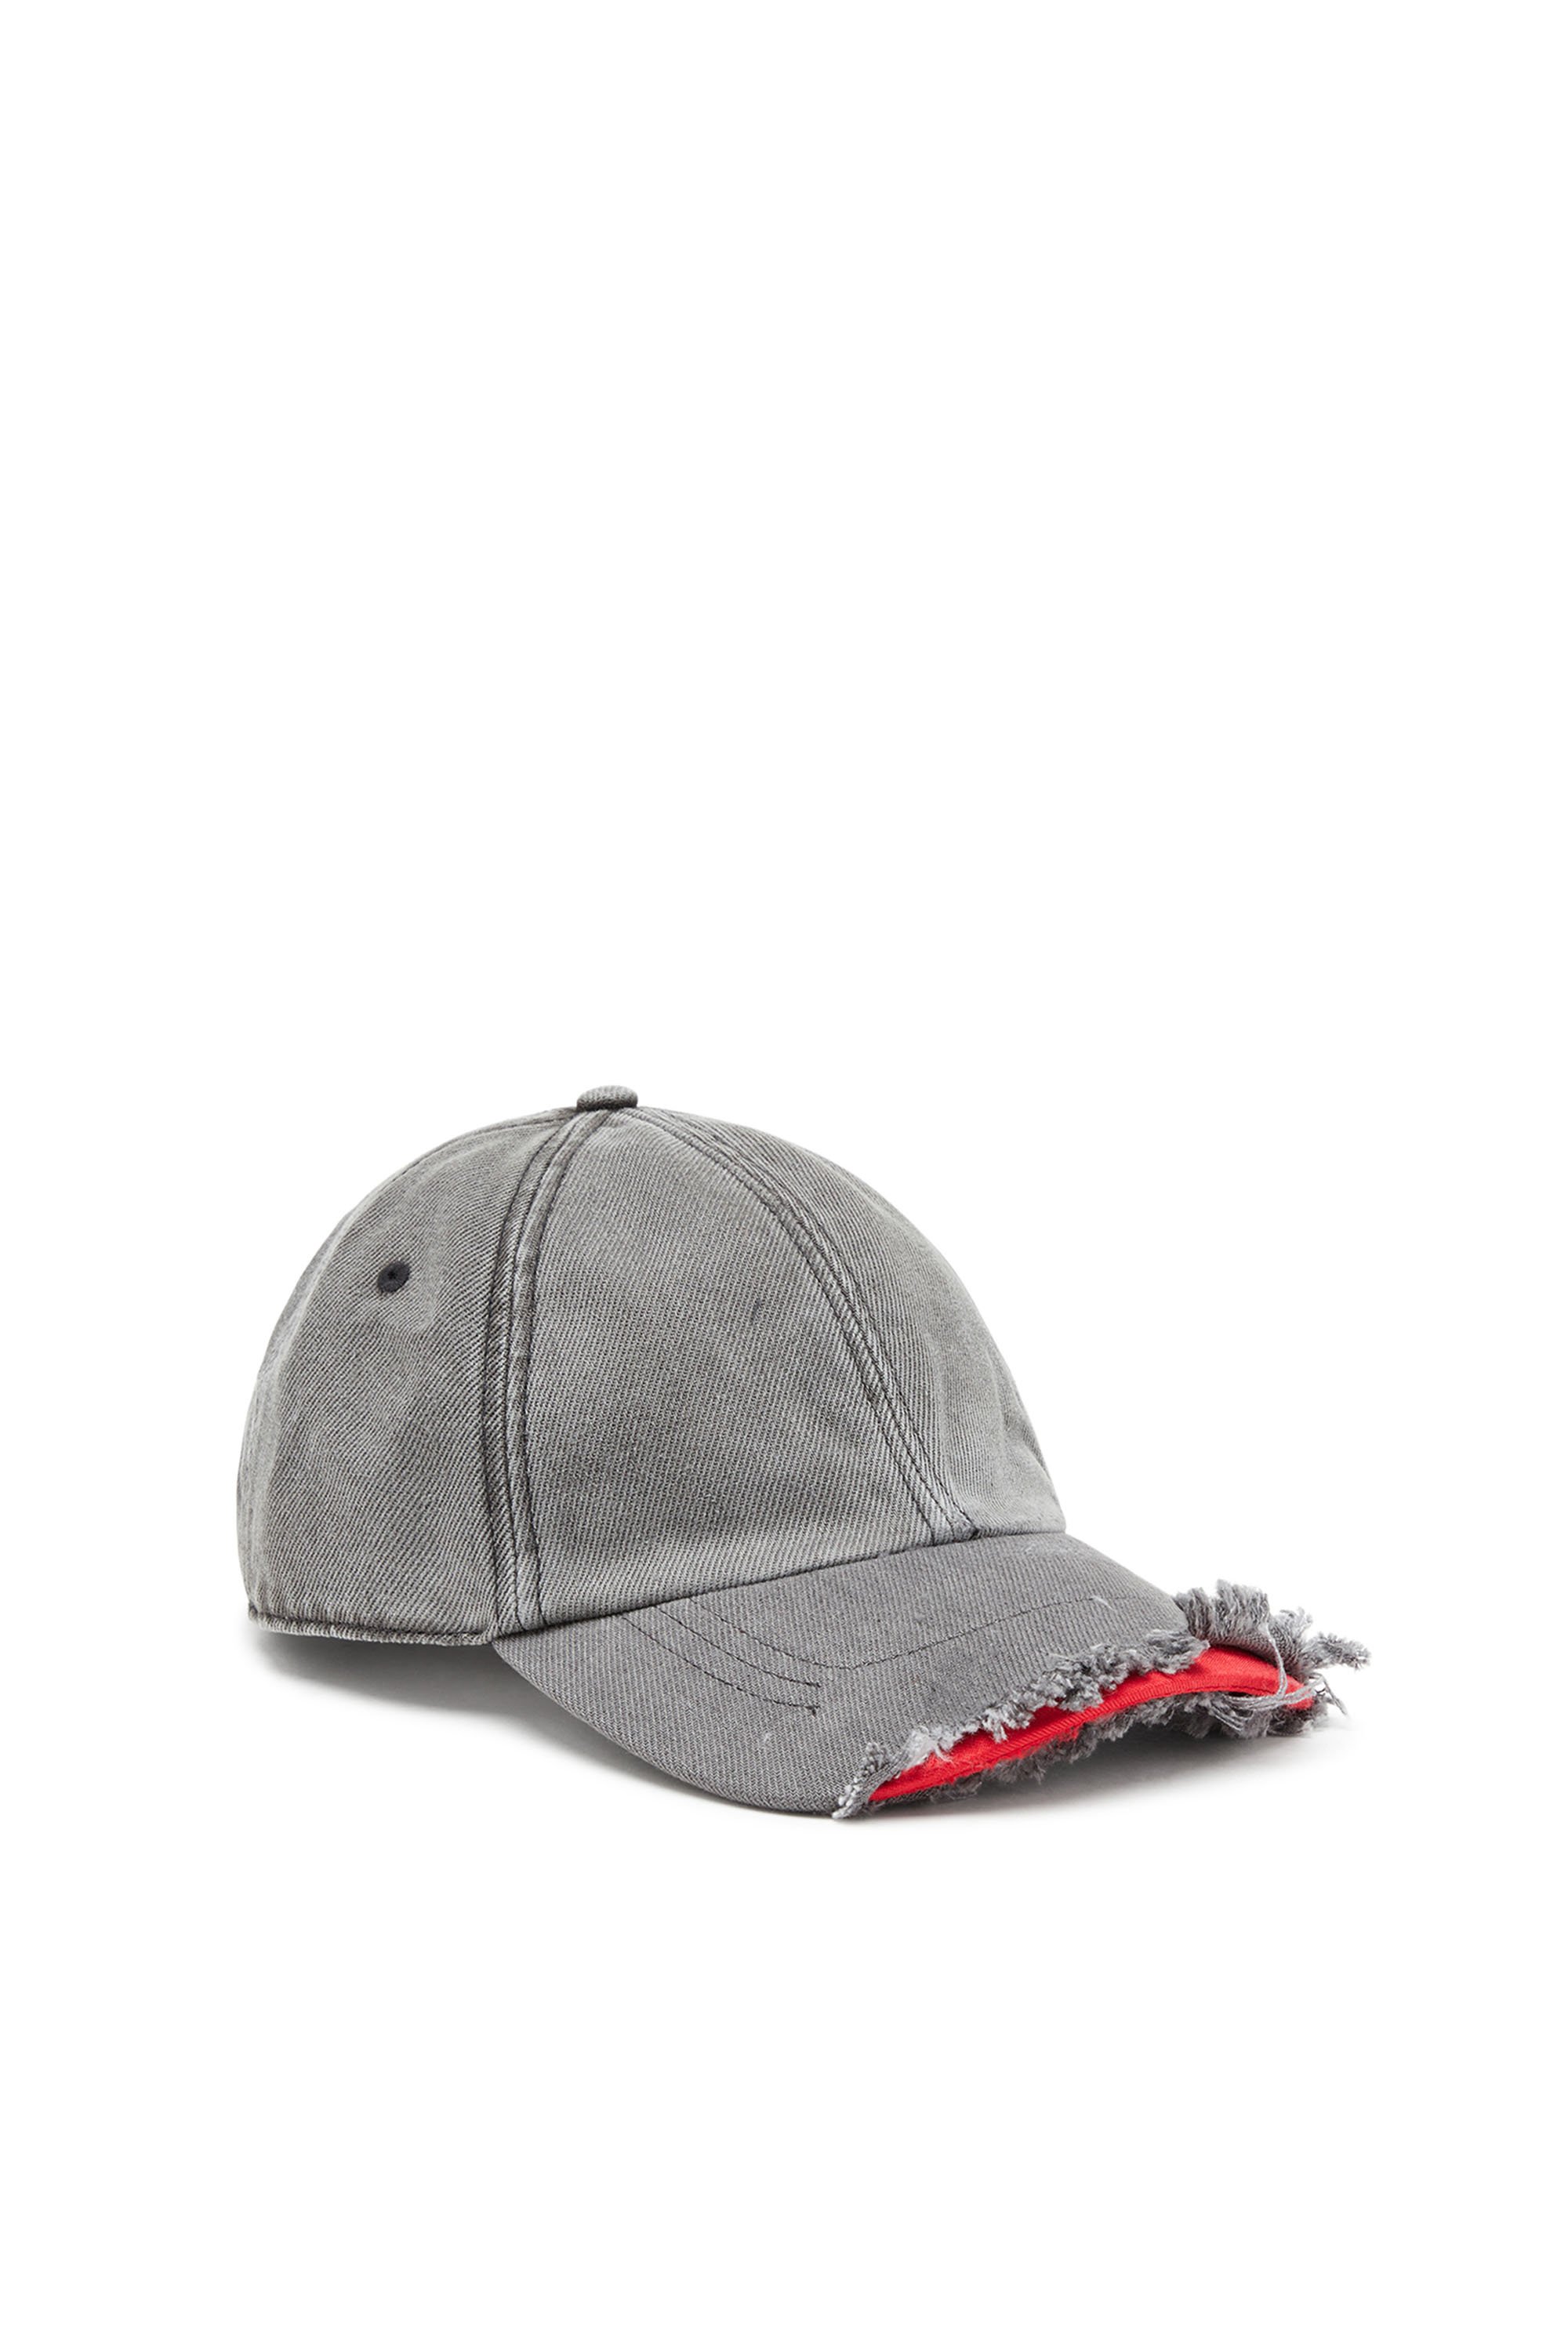 Baseball cap with destroyed peak